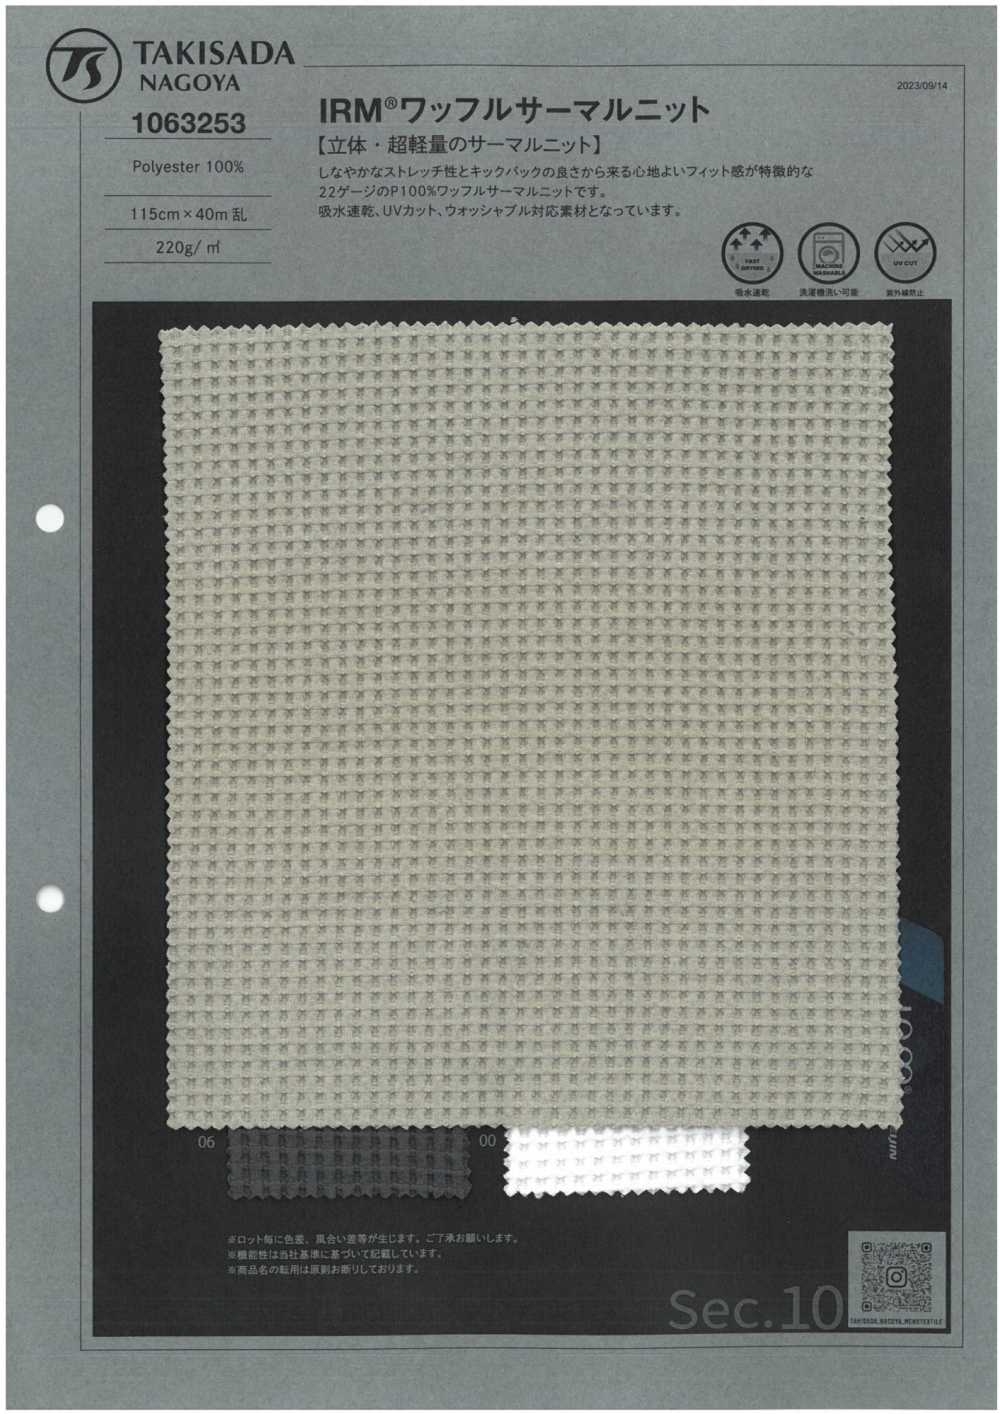 1063253 IRM® Waffle Knit Thermal Knit[Textile / Fabric] Takisada Nagoya